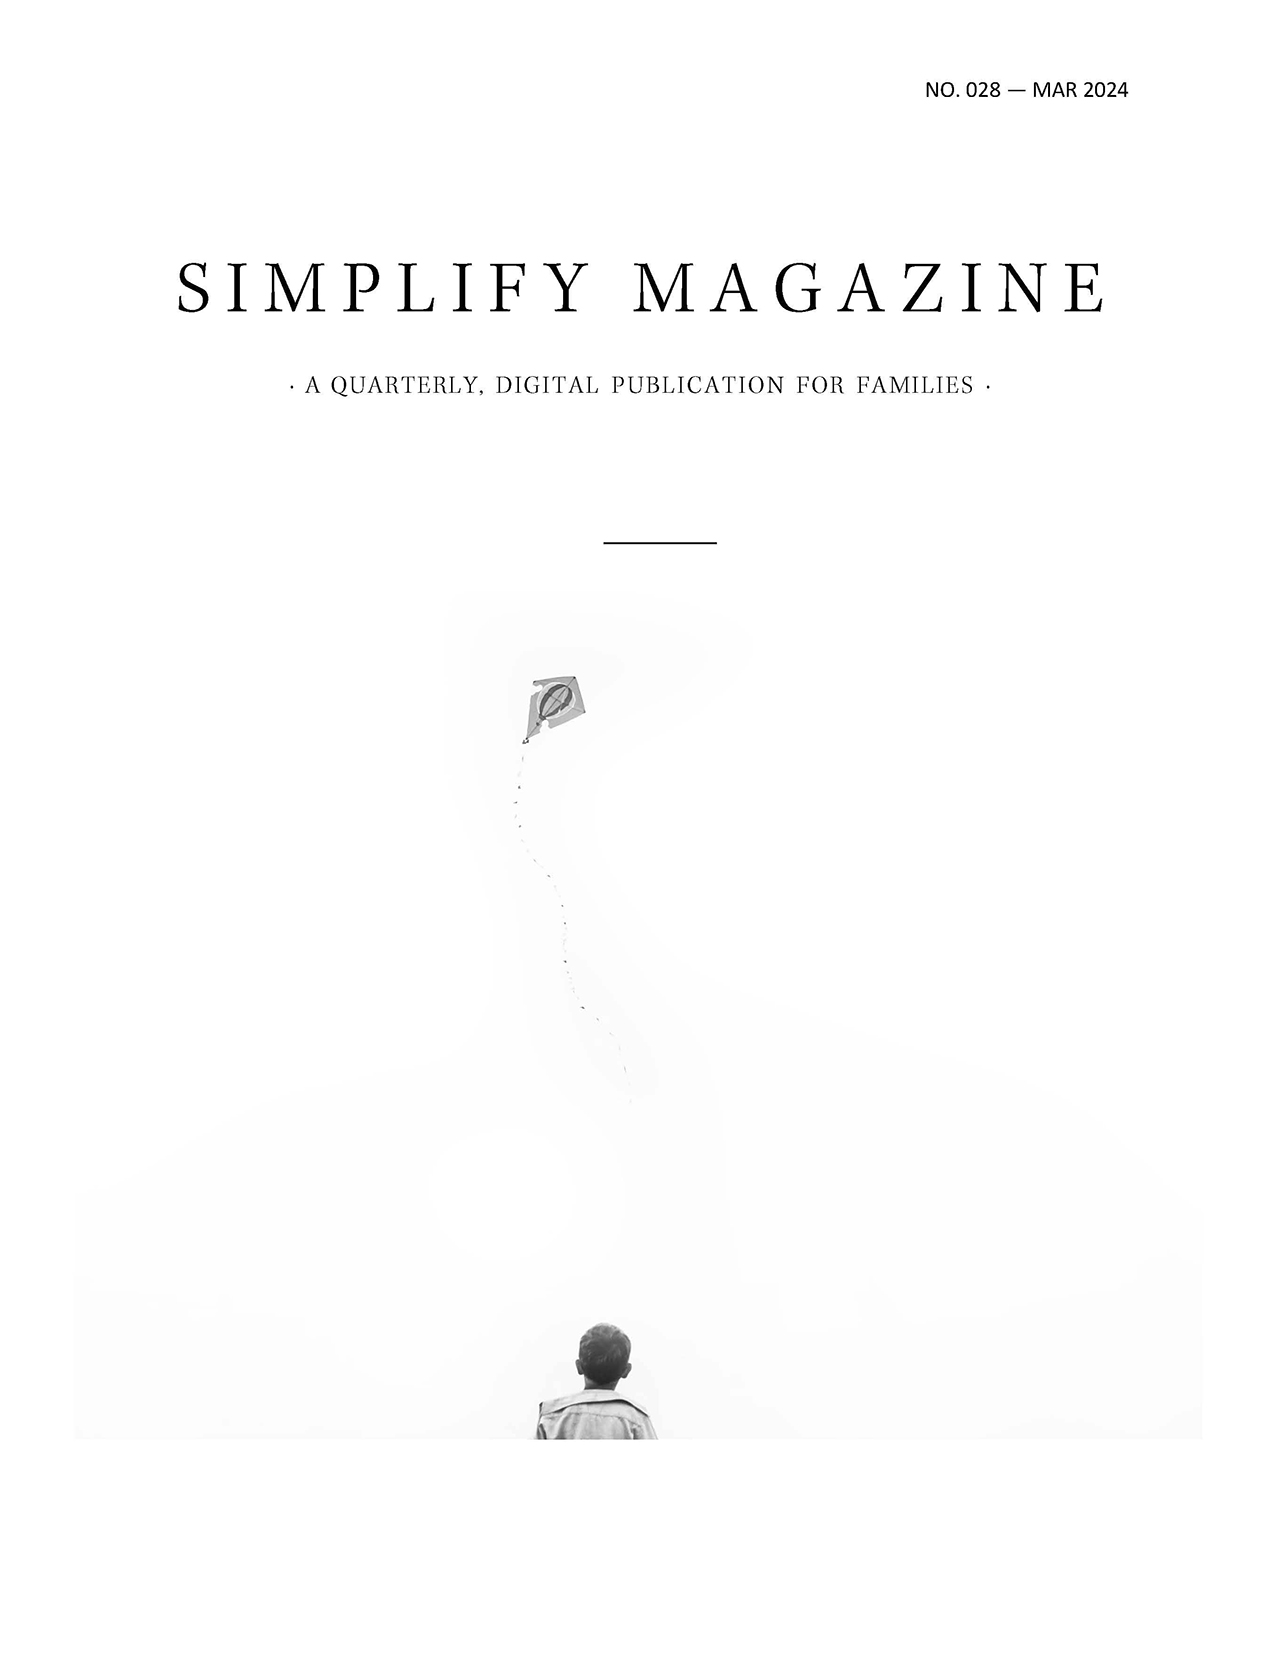 Simplify Magazine Issue #028